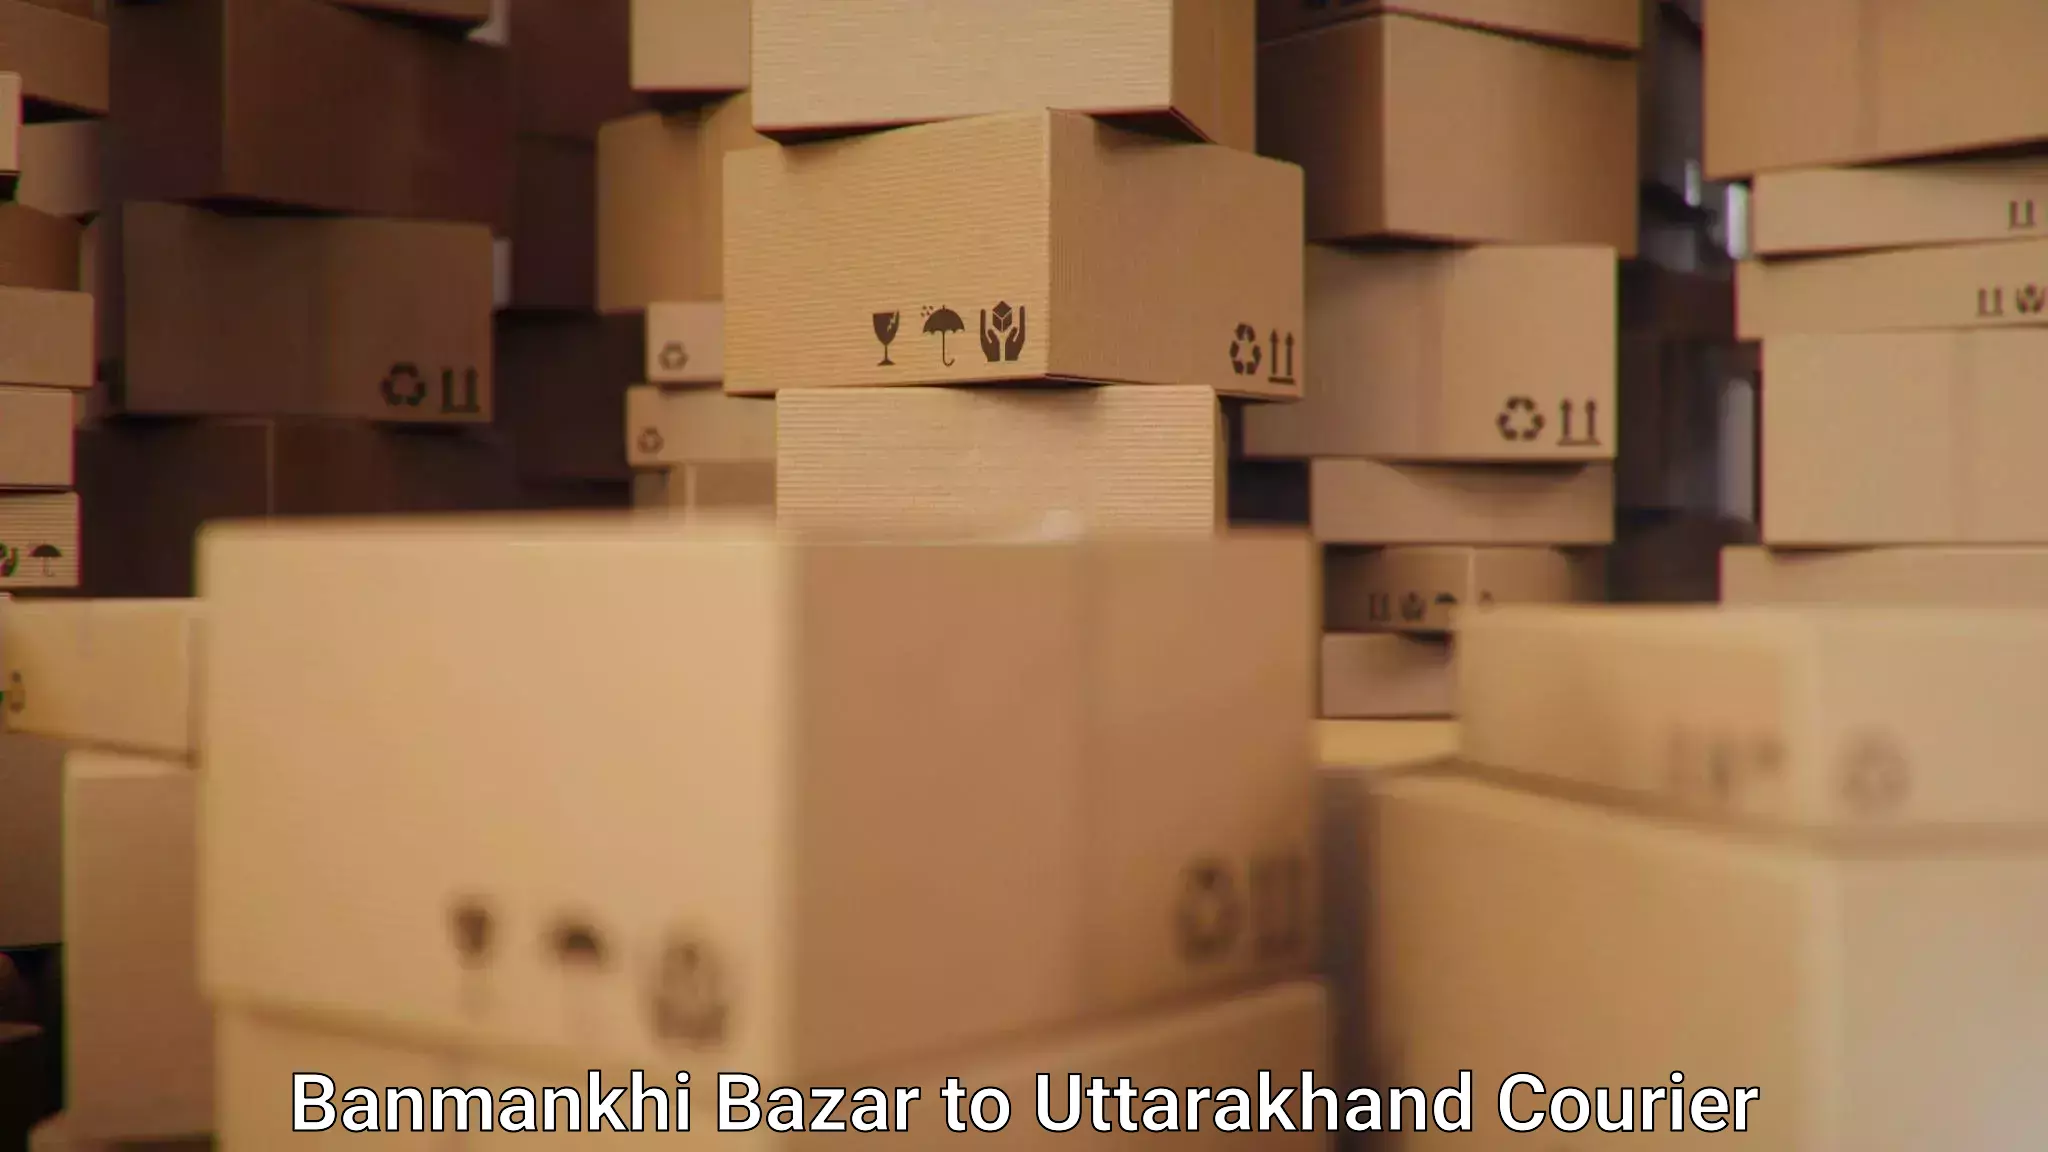 Next-day freight services Banmankhi Bazar to Uttarakhand